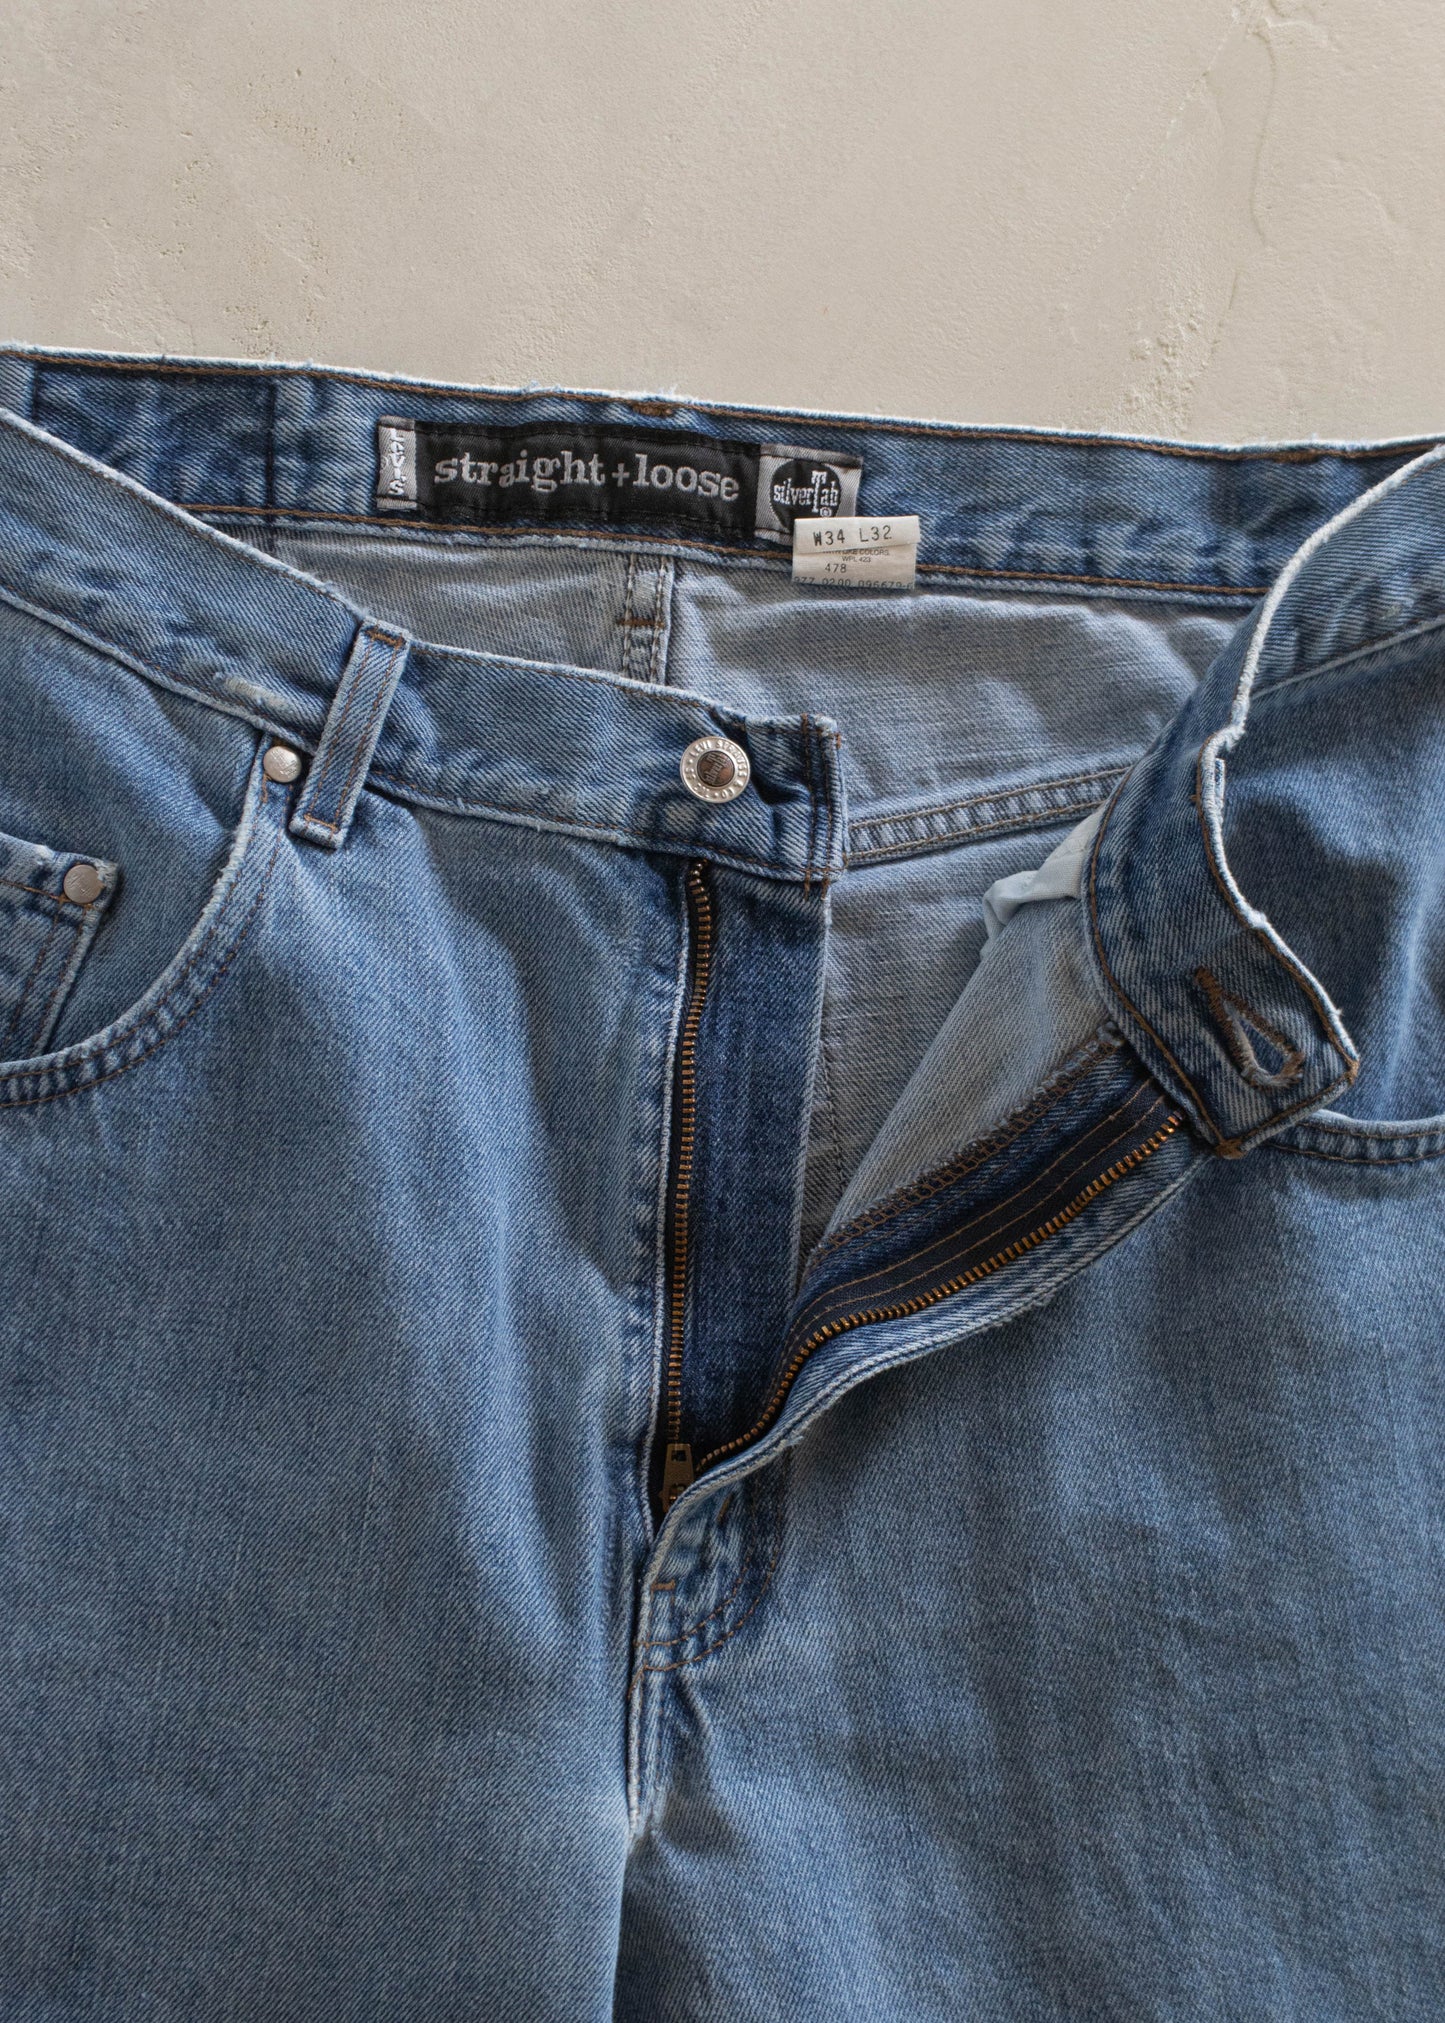 1980s Levi's Silver Tab Straight Loose Fit Lightwash Jeans Size Women's 30 Men's 32